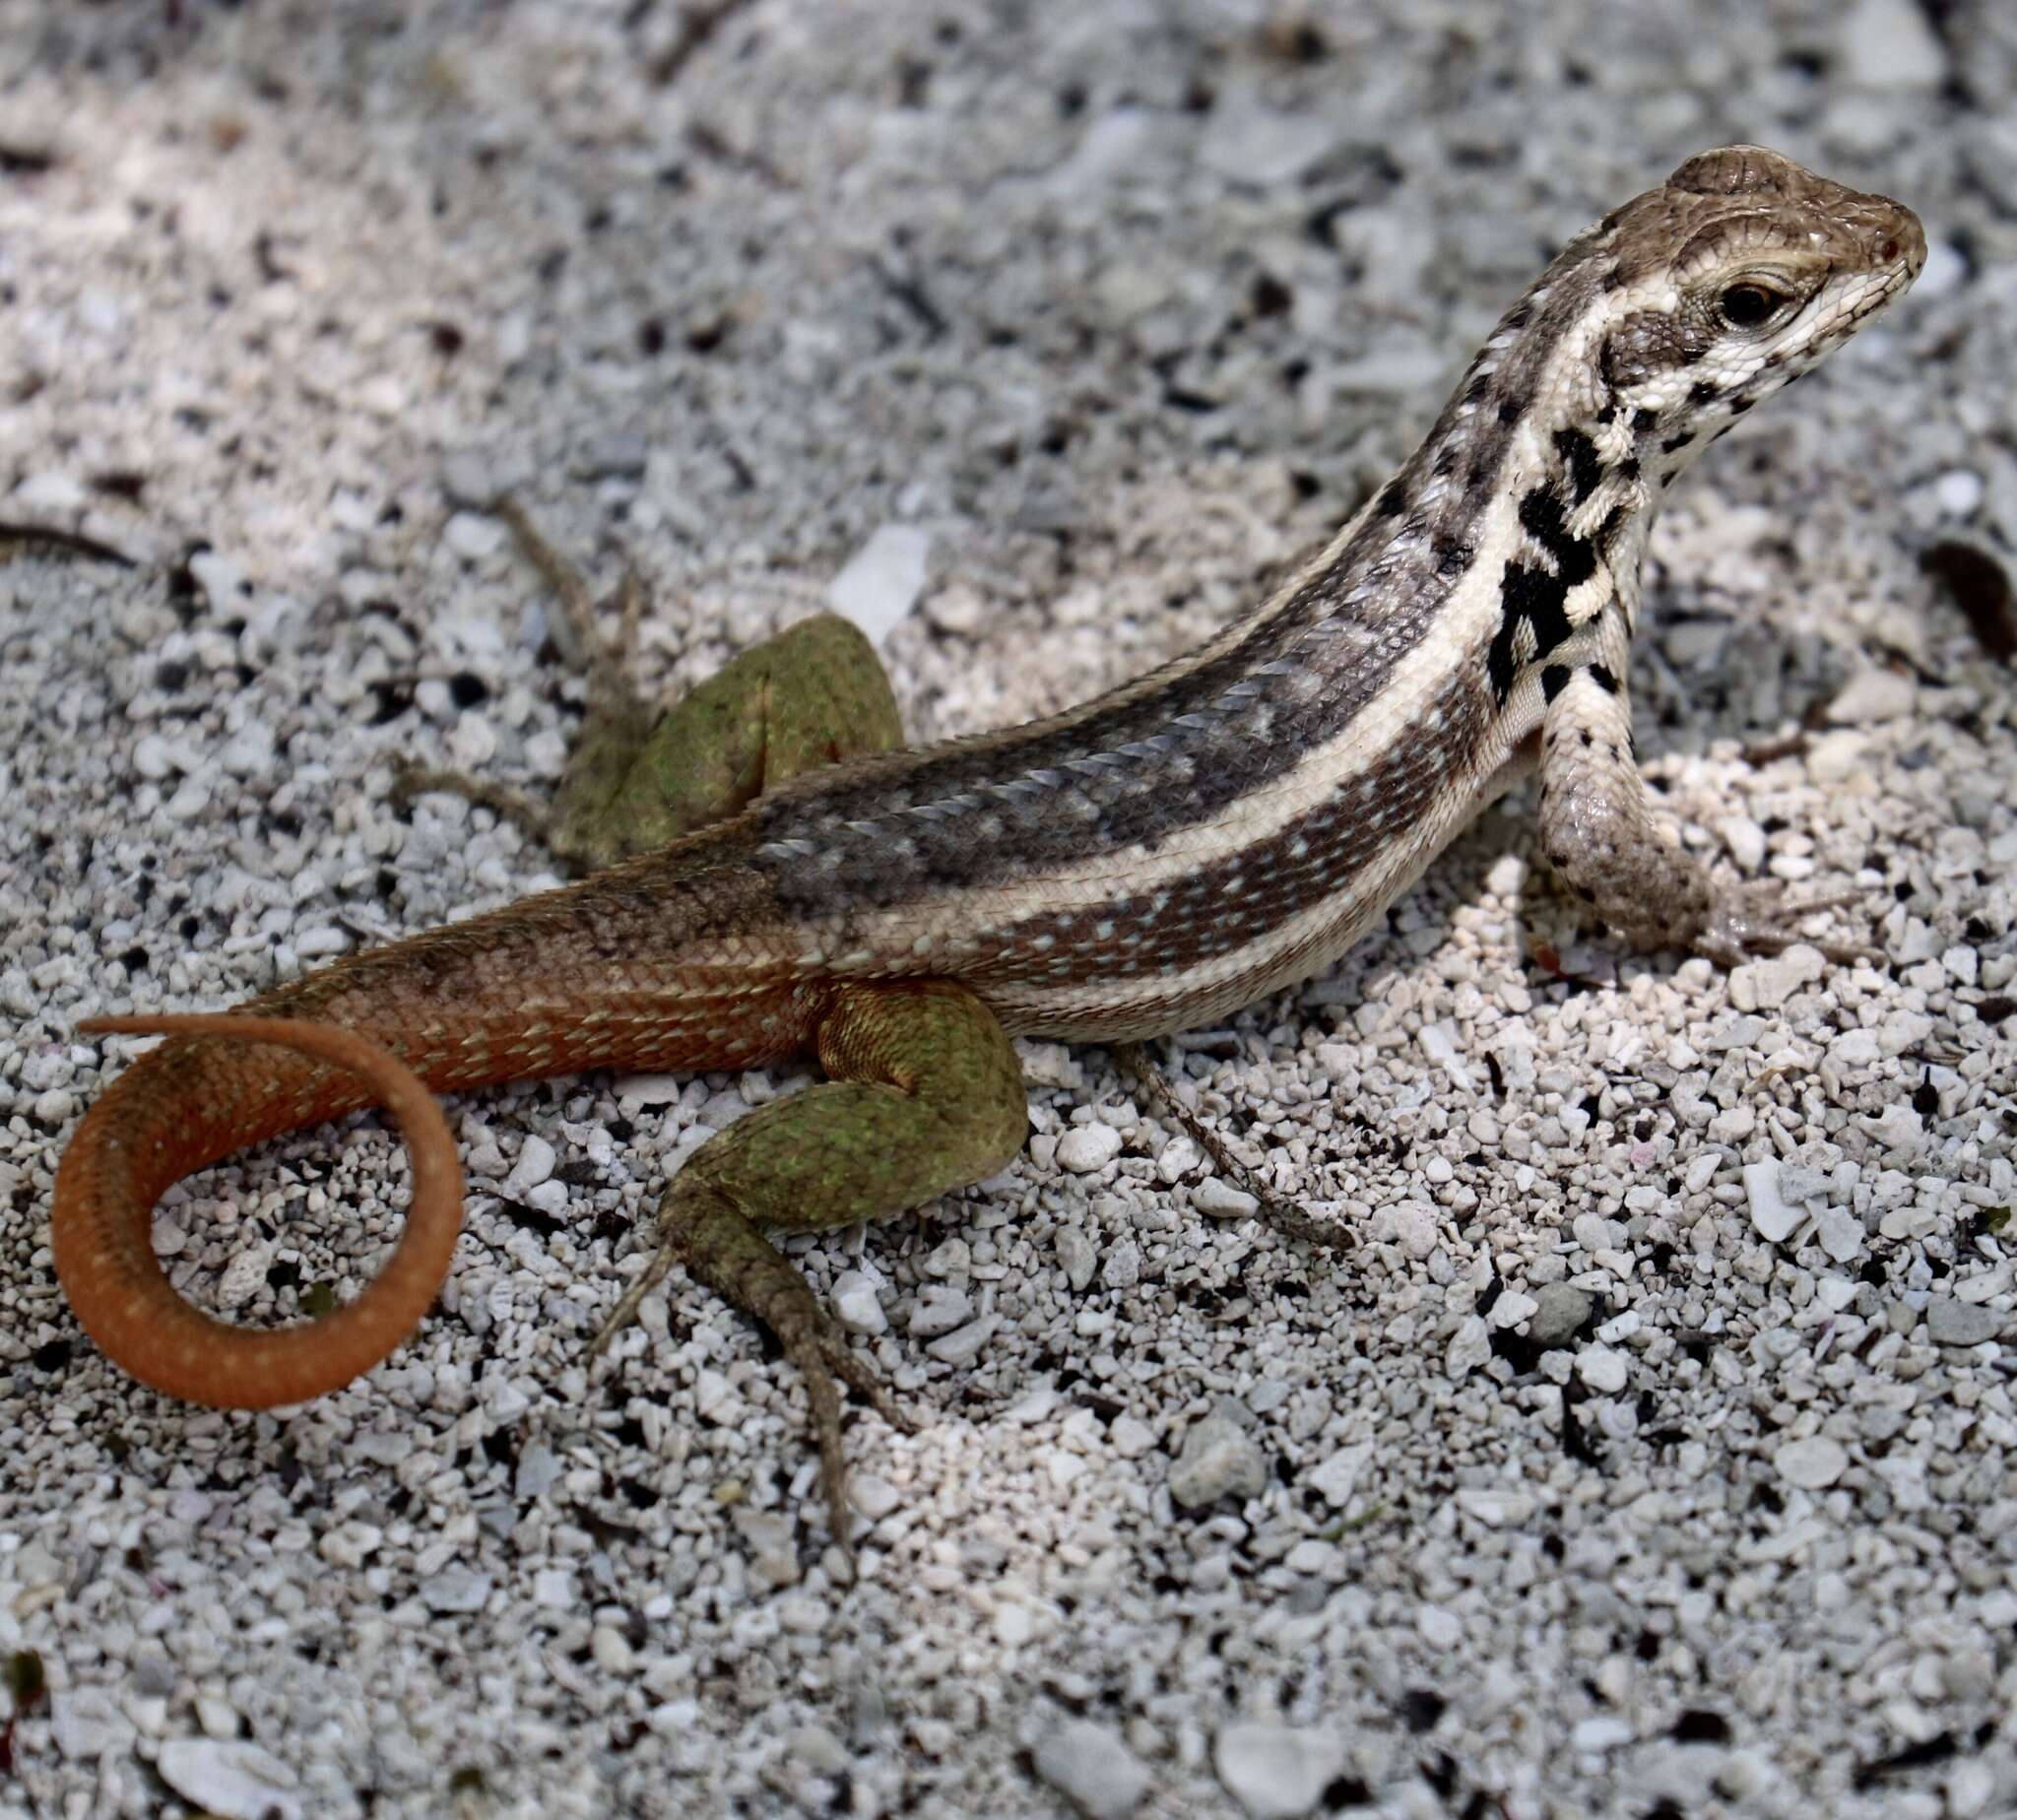 Image of Santo Domingo Curlytail Lizard